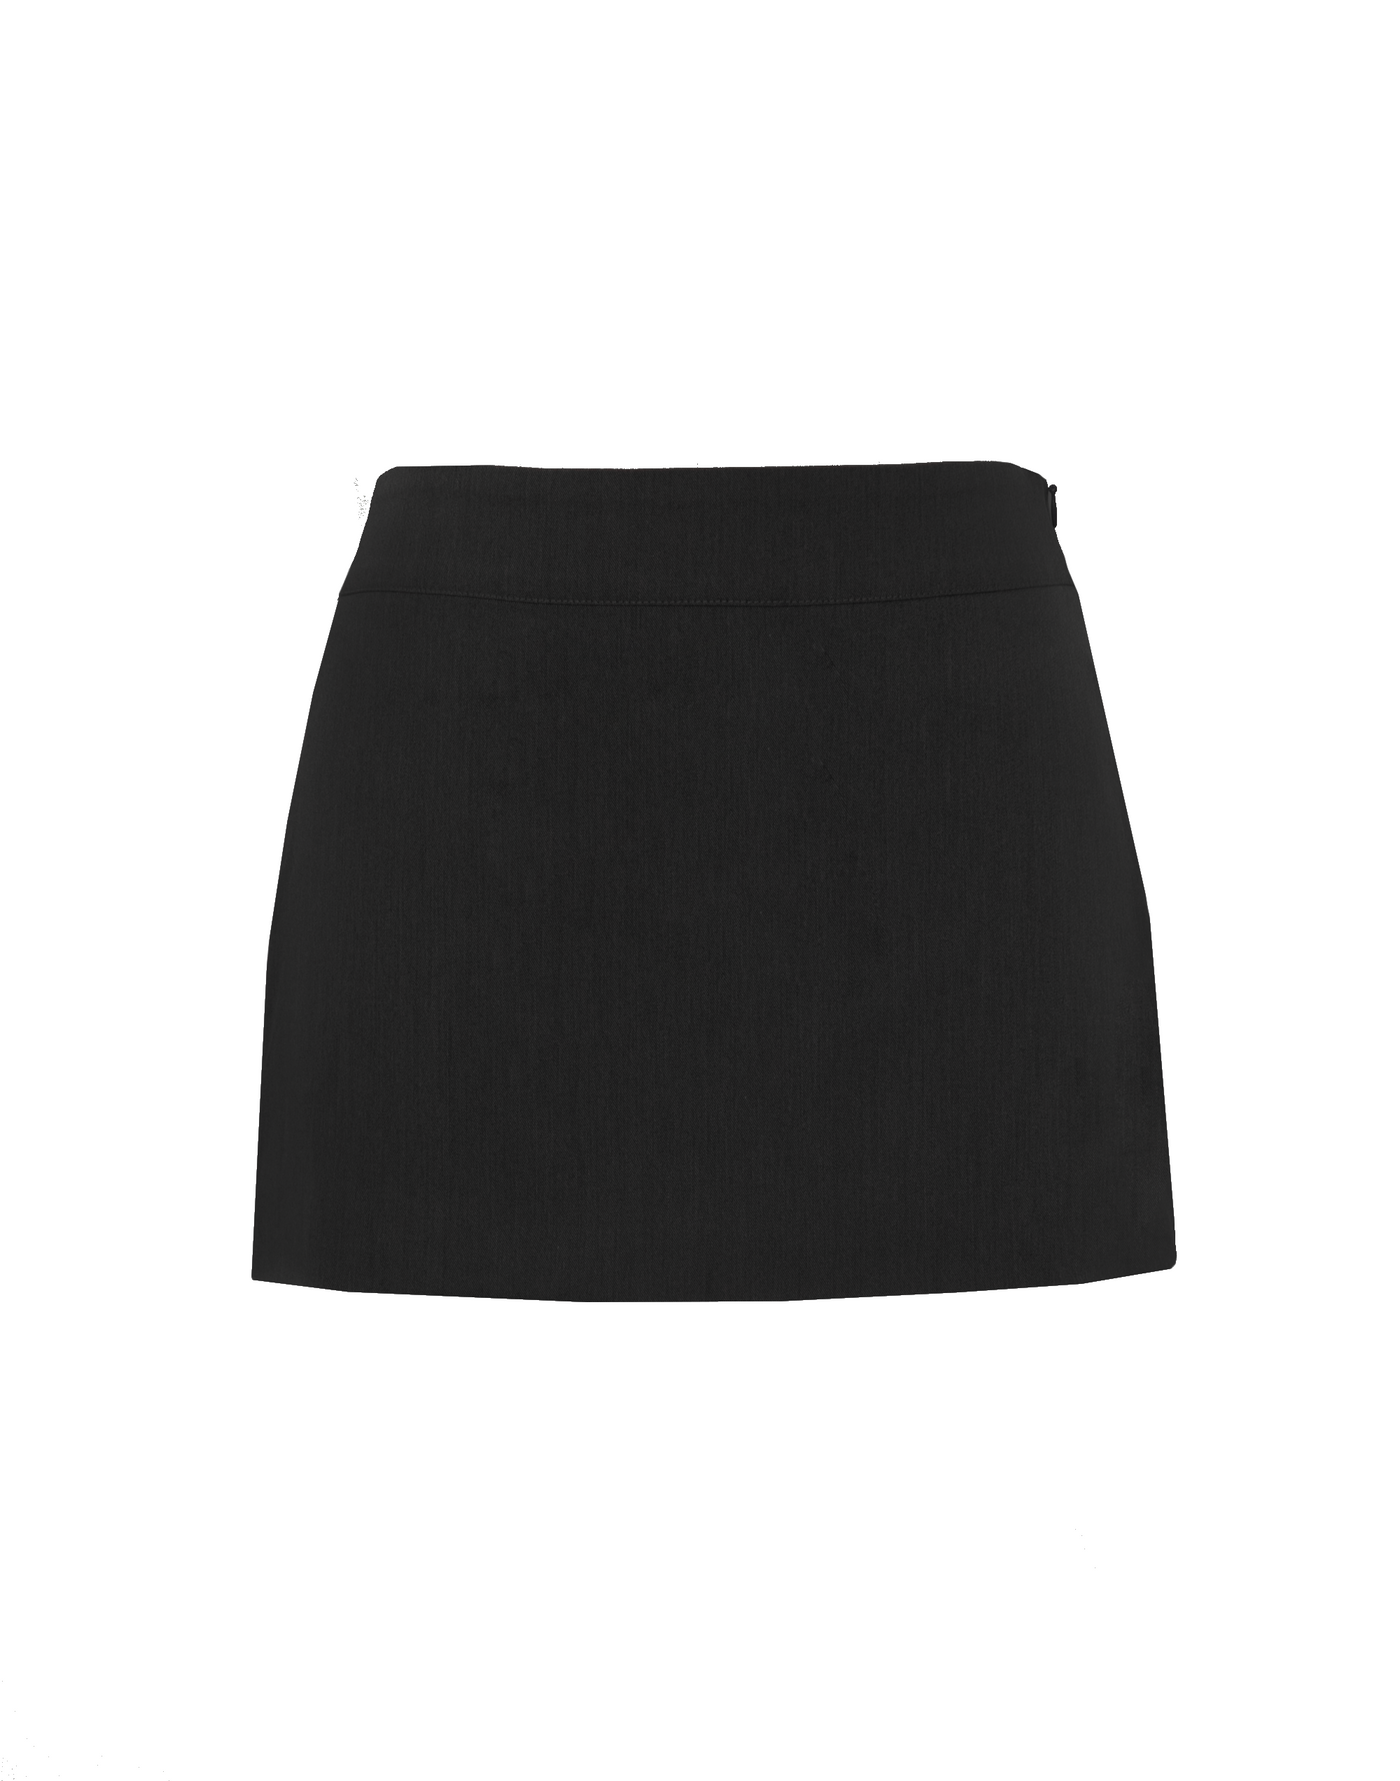 Ashwood Mini Skirt (Black) - Mid-Rise Mini Skirt - Women's Skirt - Charcoal Clothing